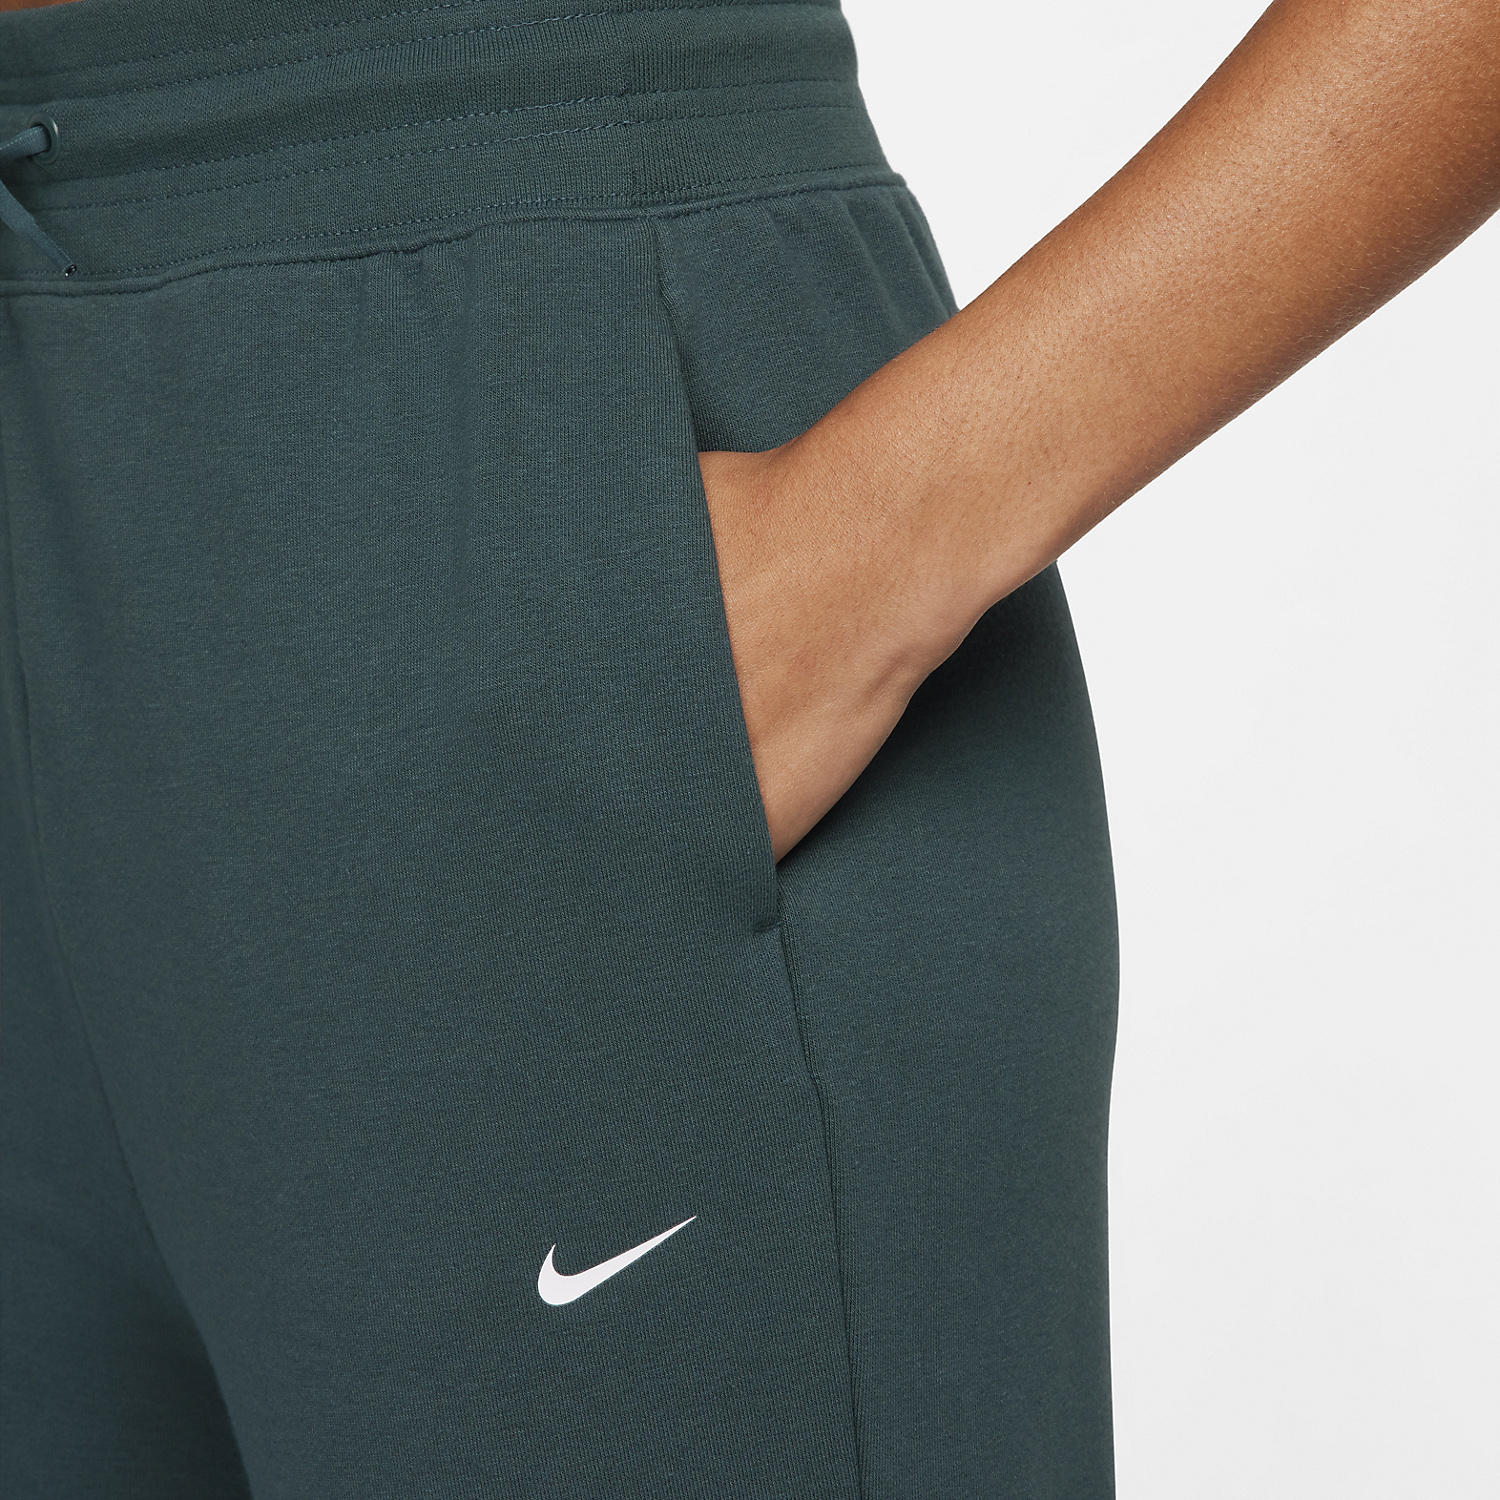 Nike Dri-FIT One Pantalones - Deep Jungle/White